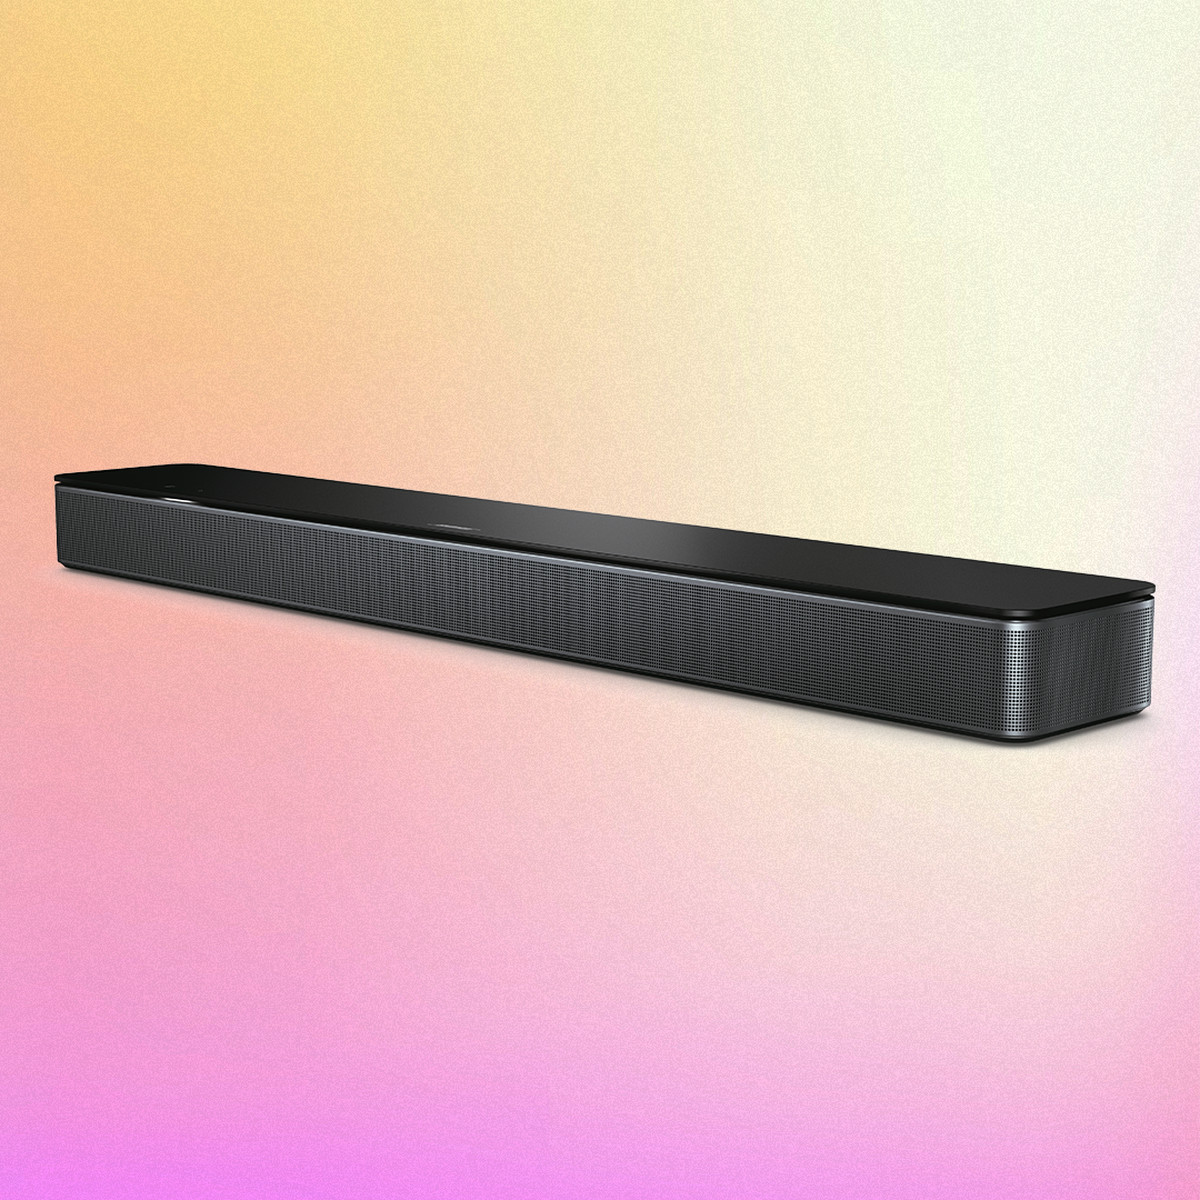 The Bose smart soundbar on a rainbow background.